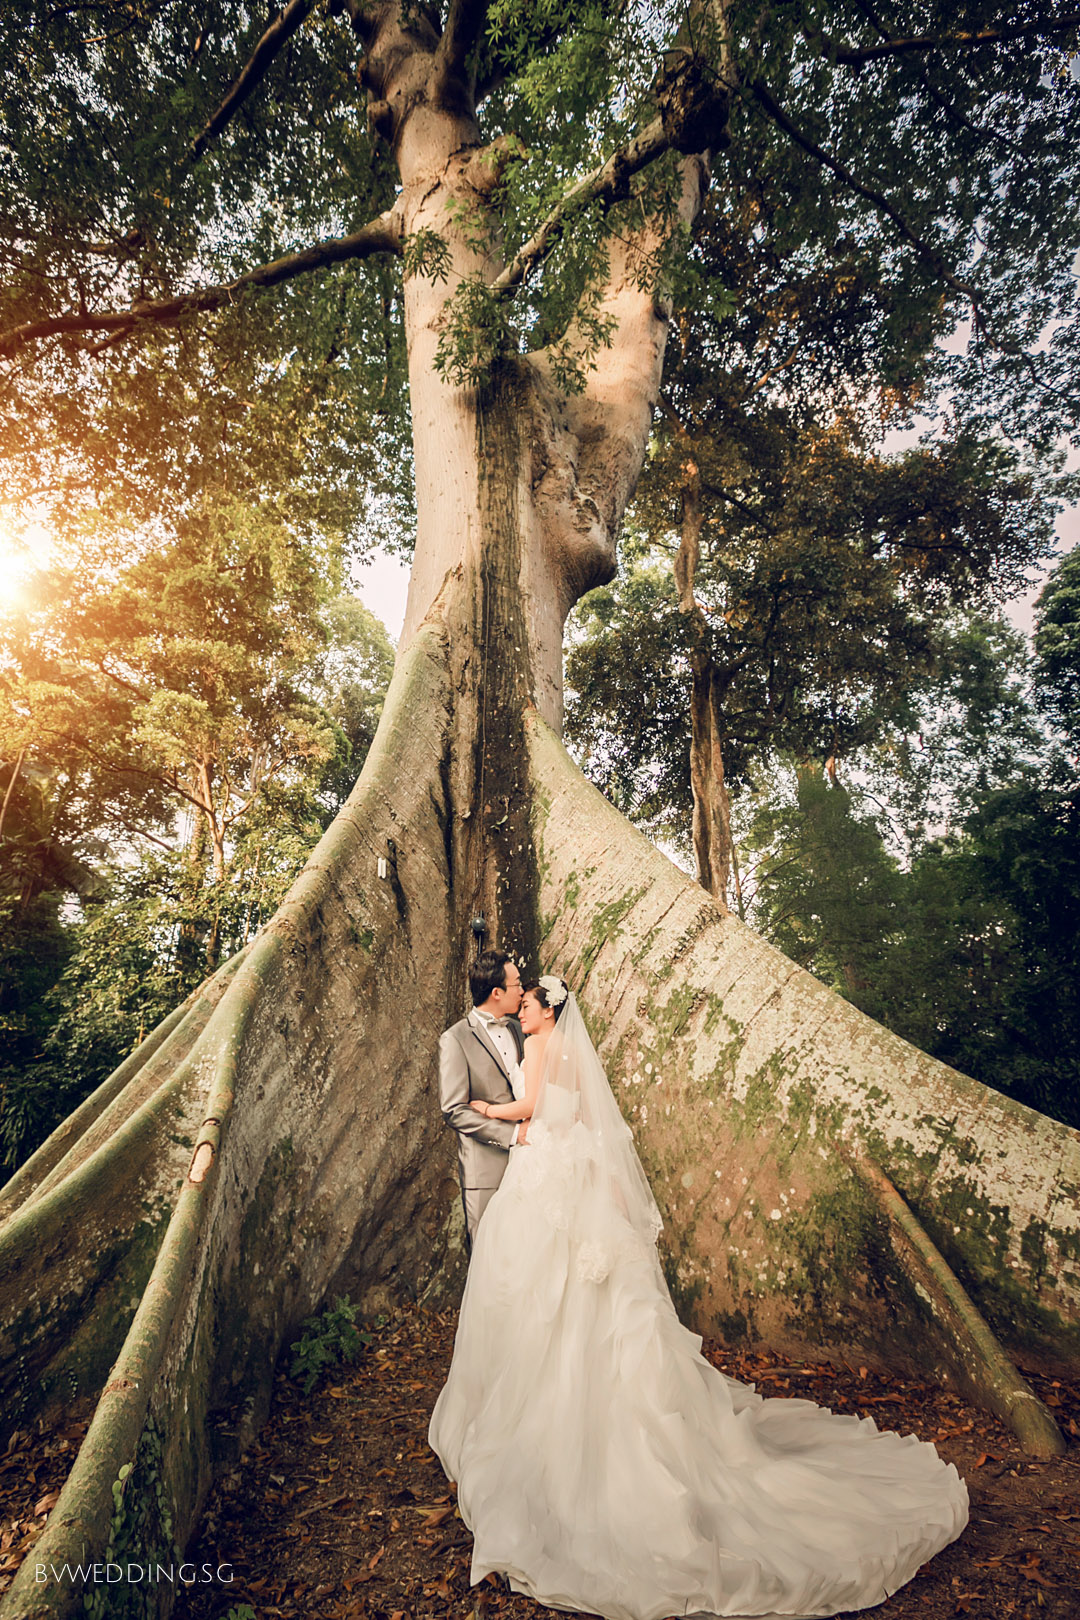 Pre-wedding Photoshoot at Botanic GardensPre-wedding Photoshoot at Botanic Gardens